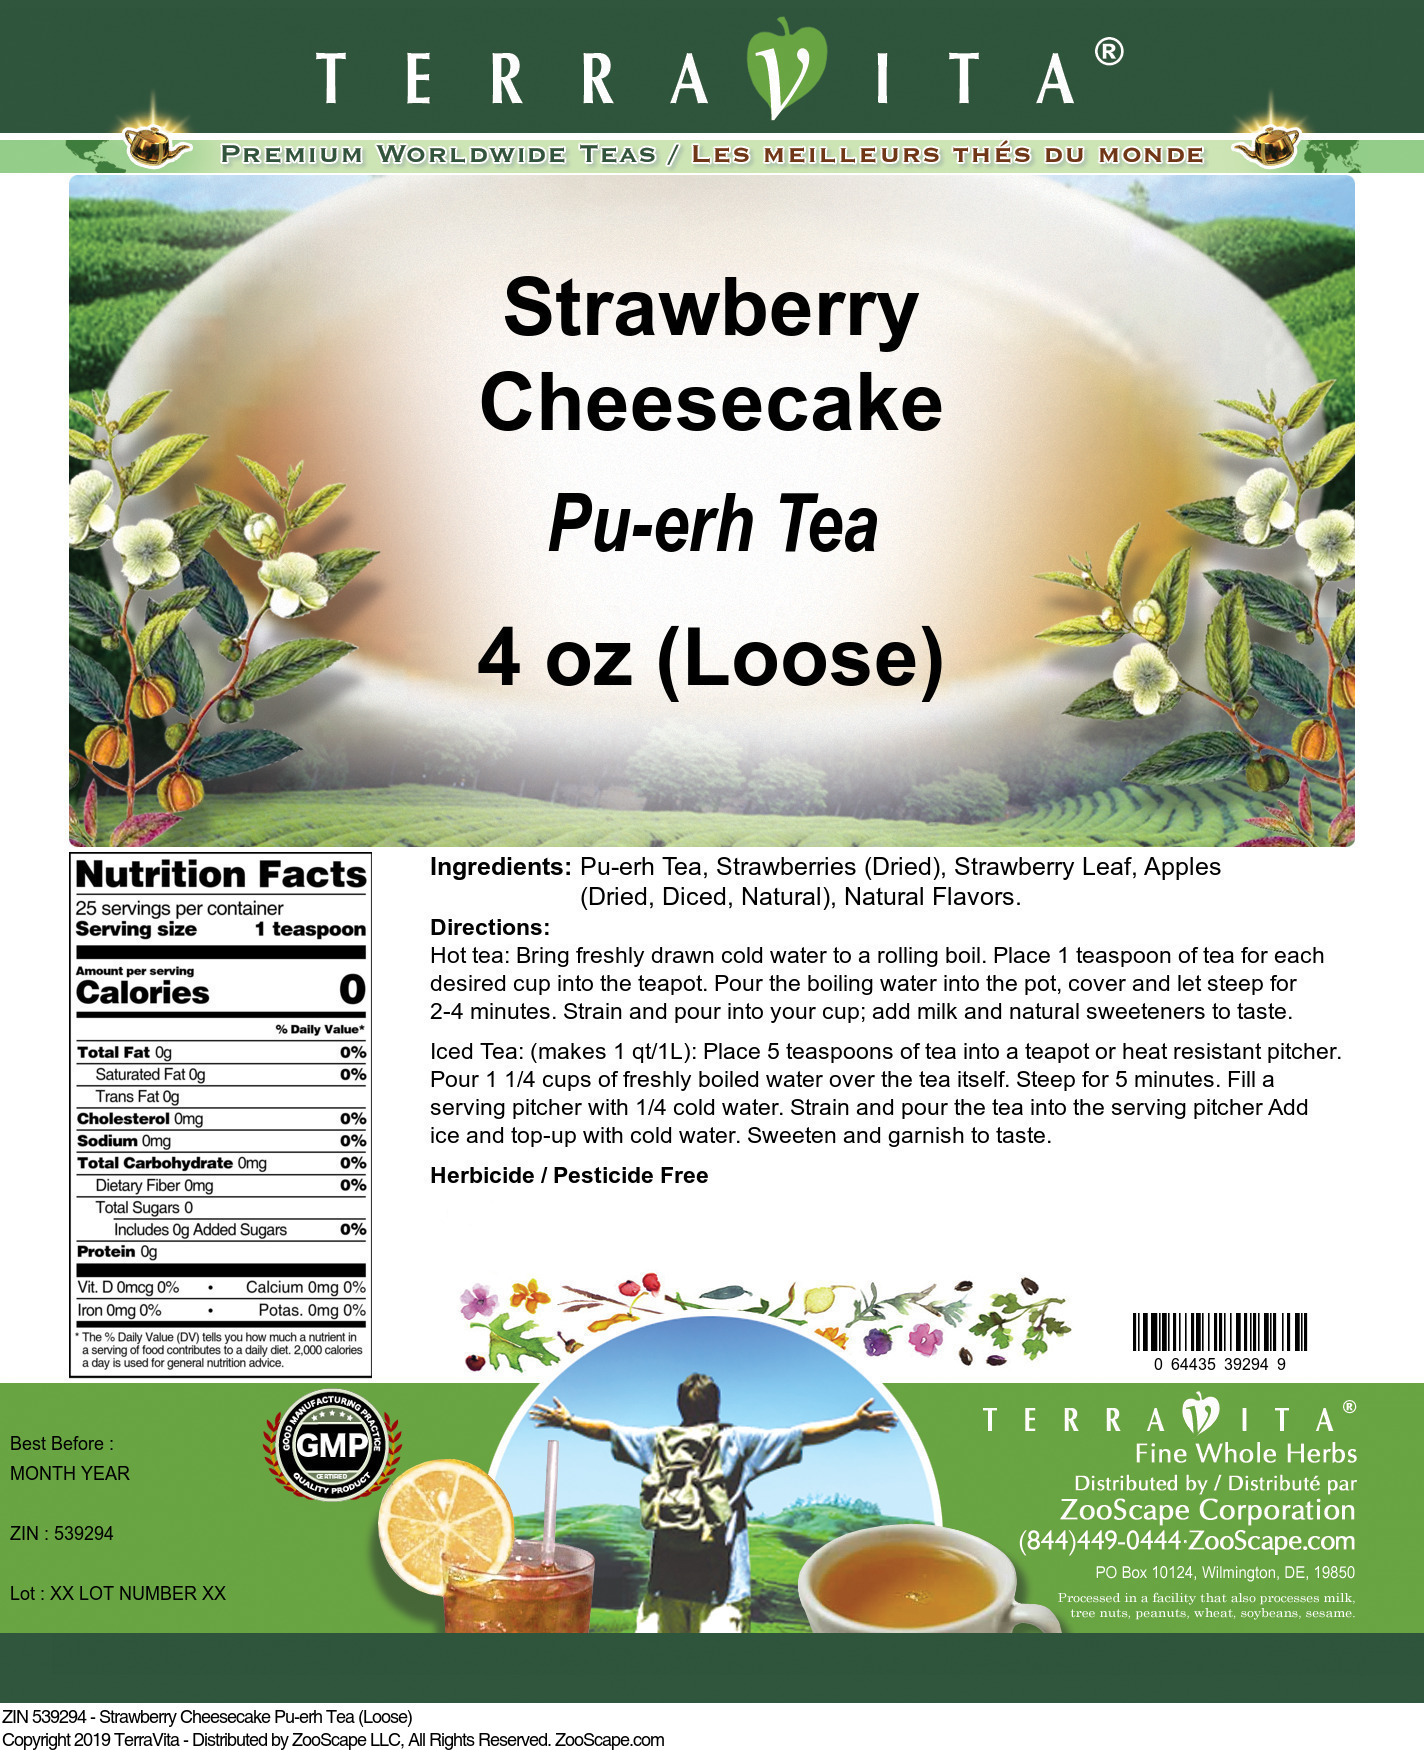 Strawberry Cheesecake Pu-erh Tea (Loose) - Label